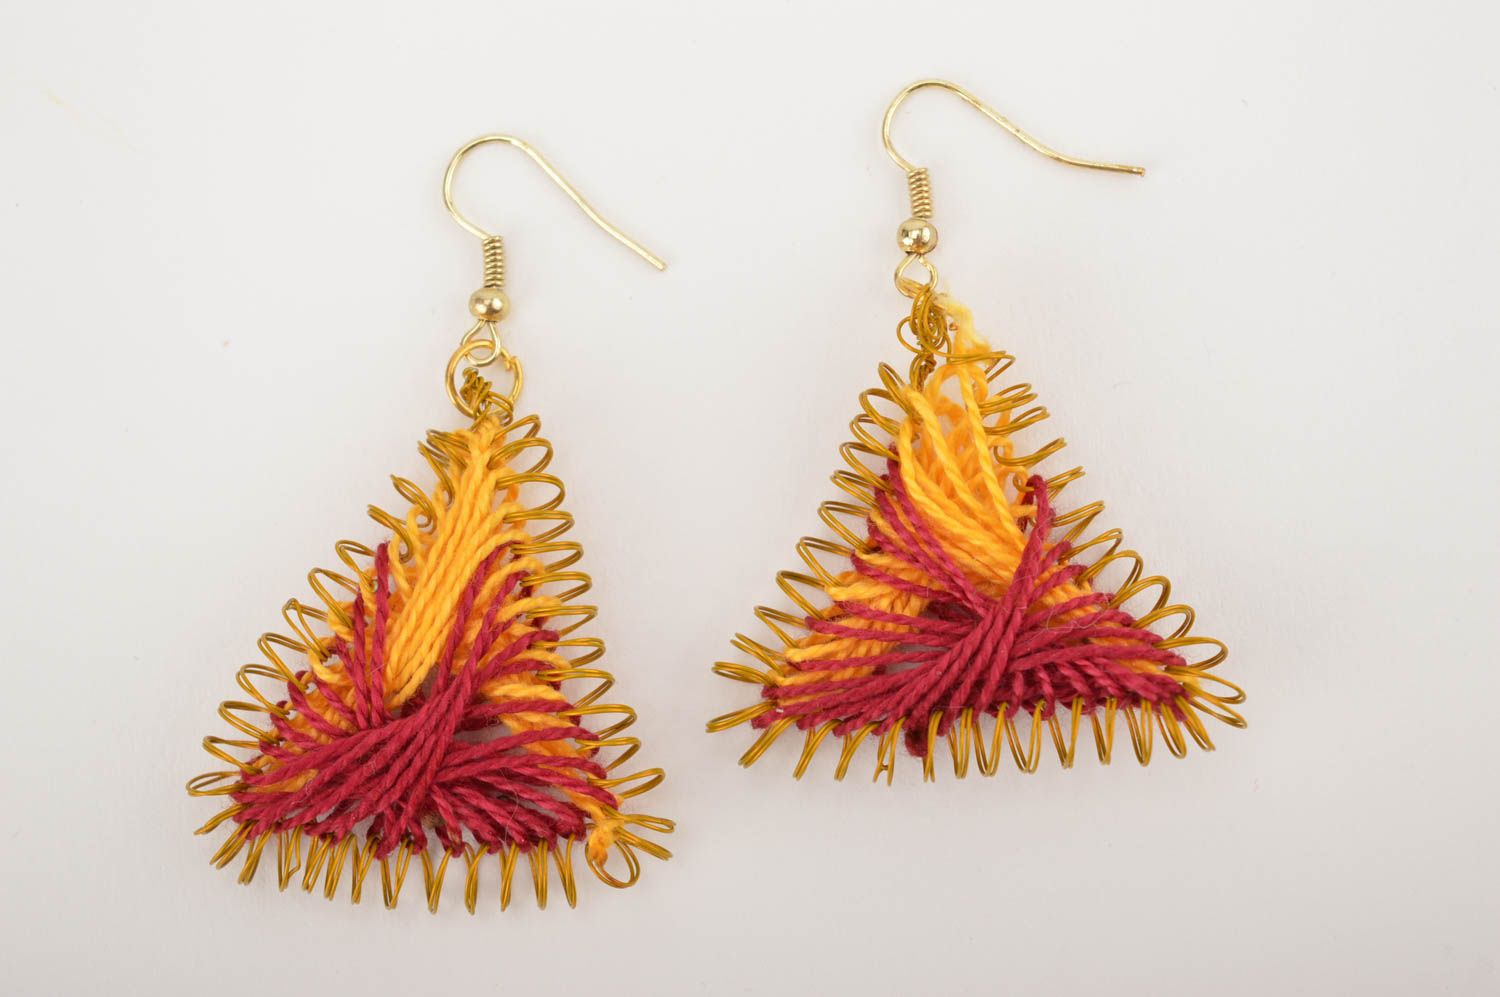 Stylish handmade textile earrings woven thread earrings wire earrings for girls photo 2